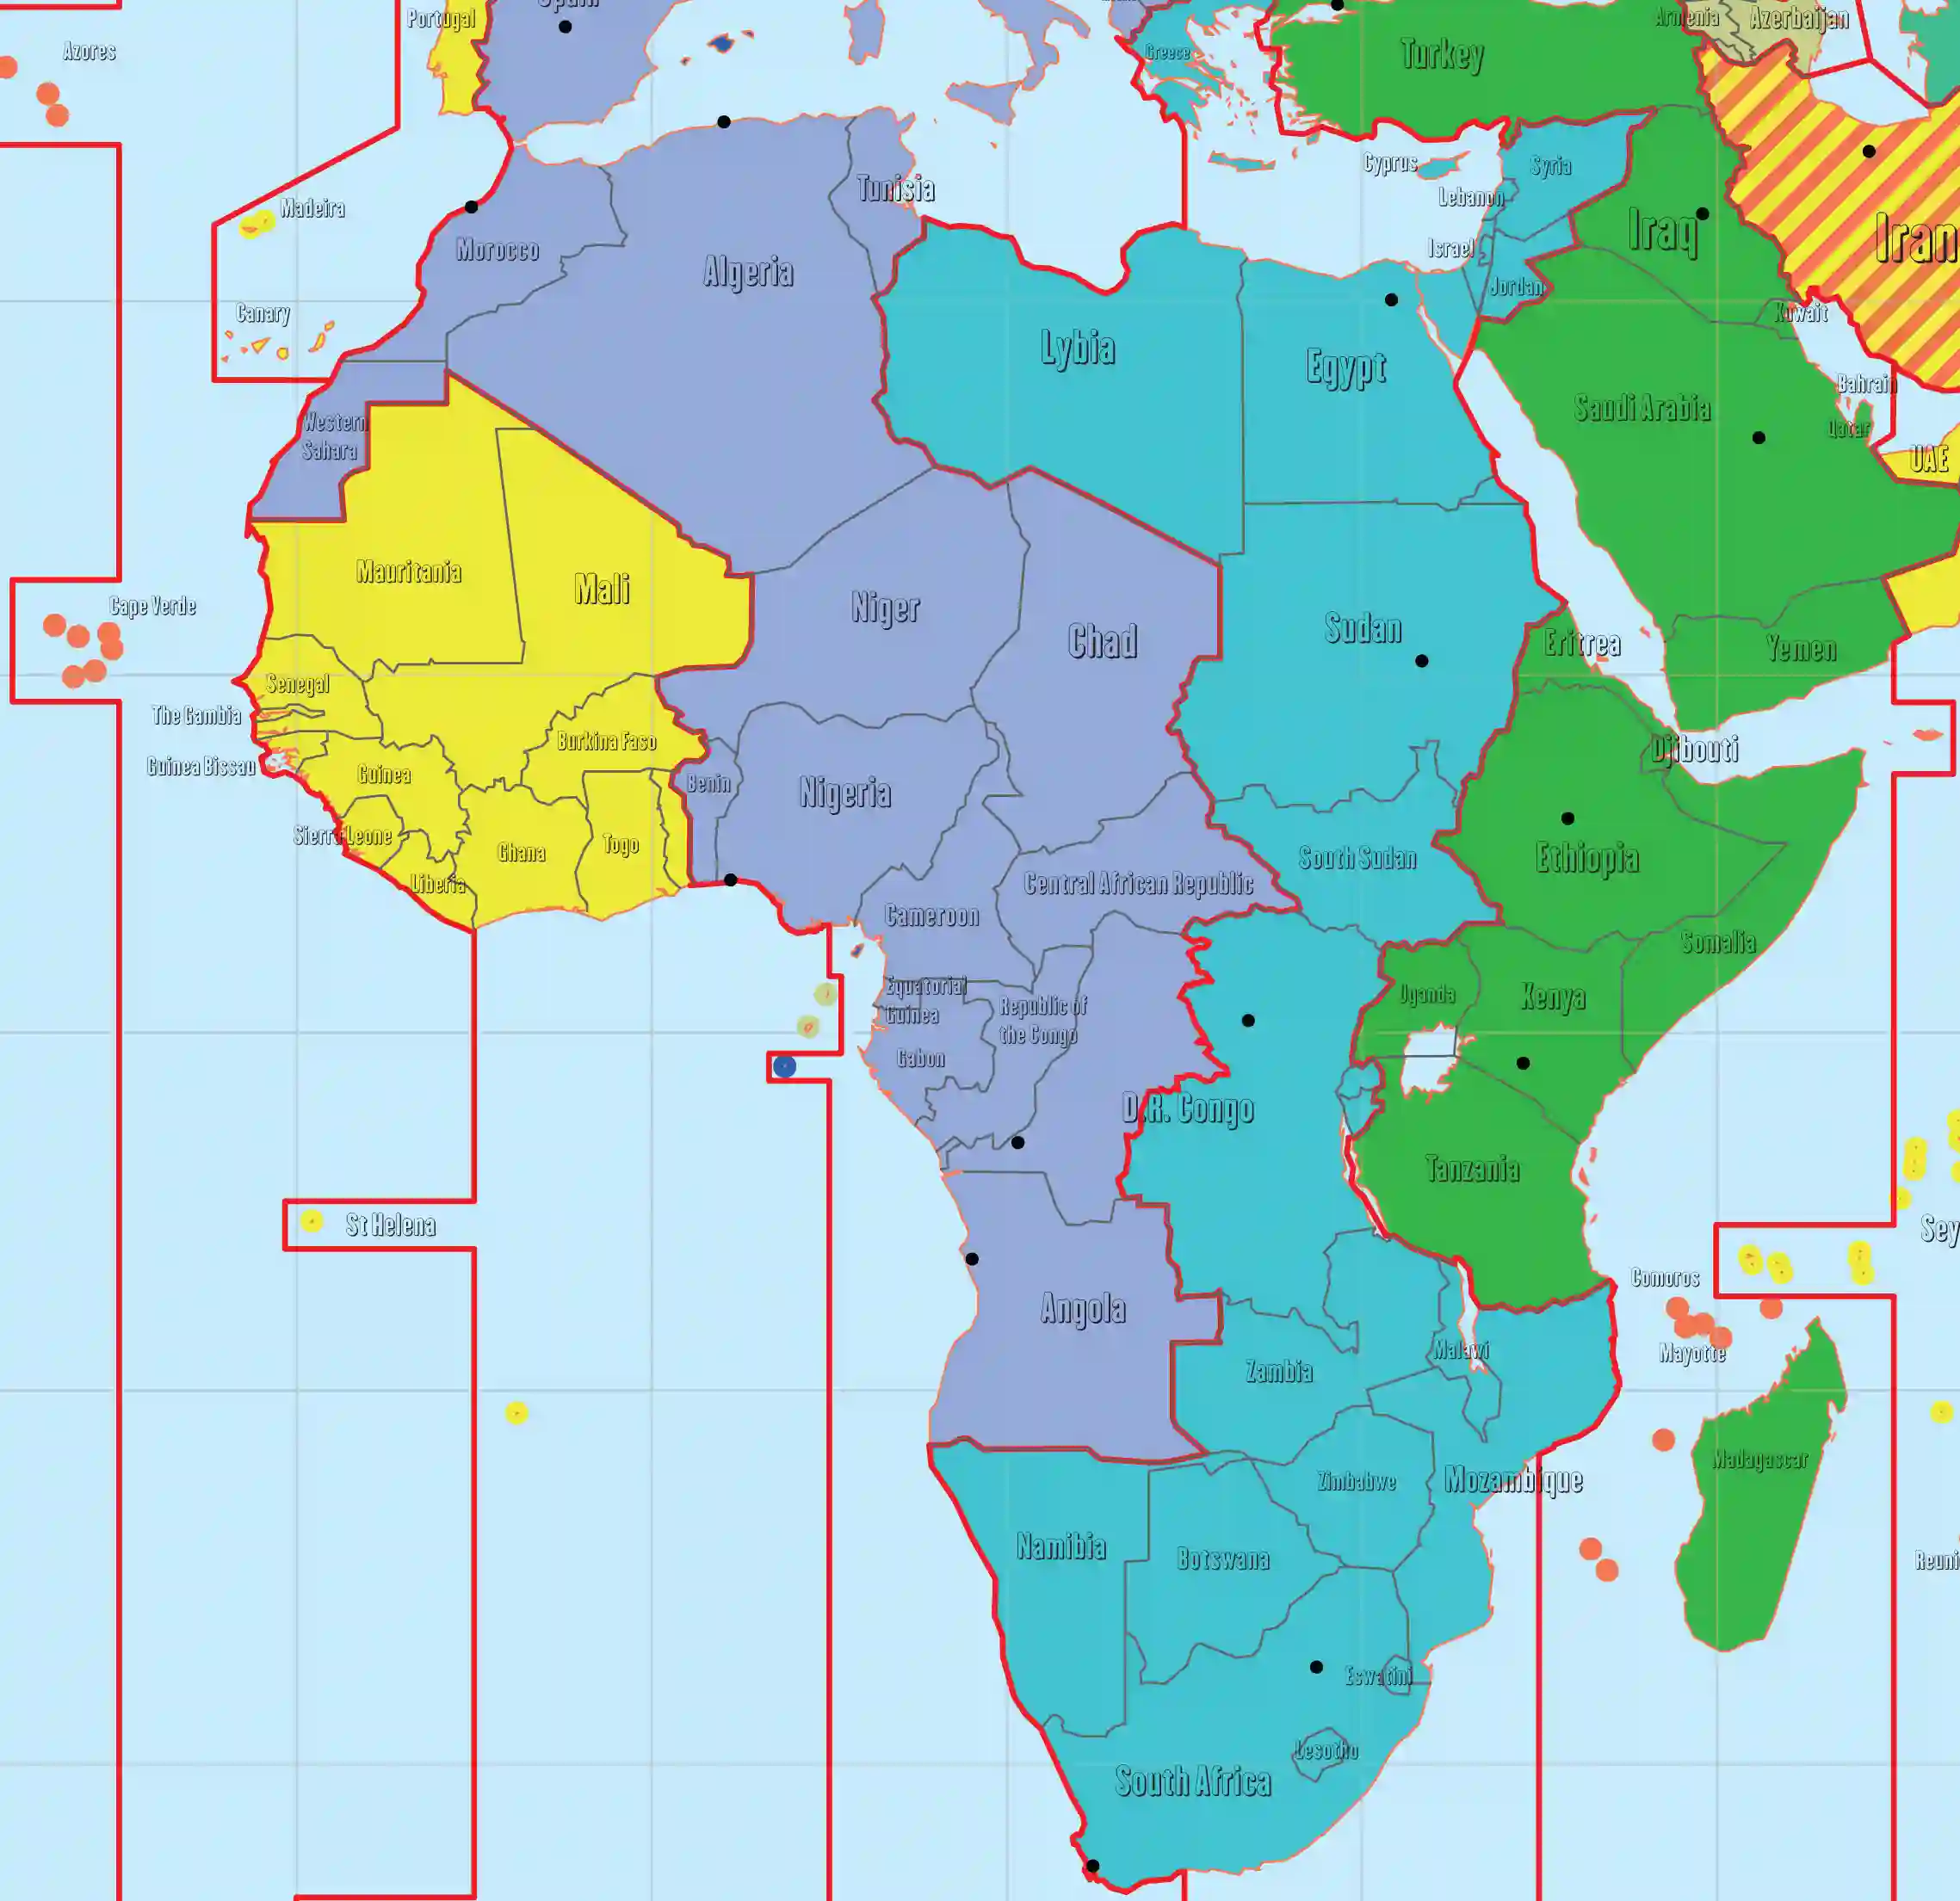 Afrika karta vremenskih zona